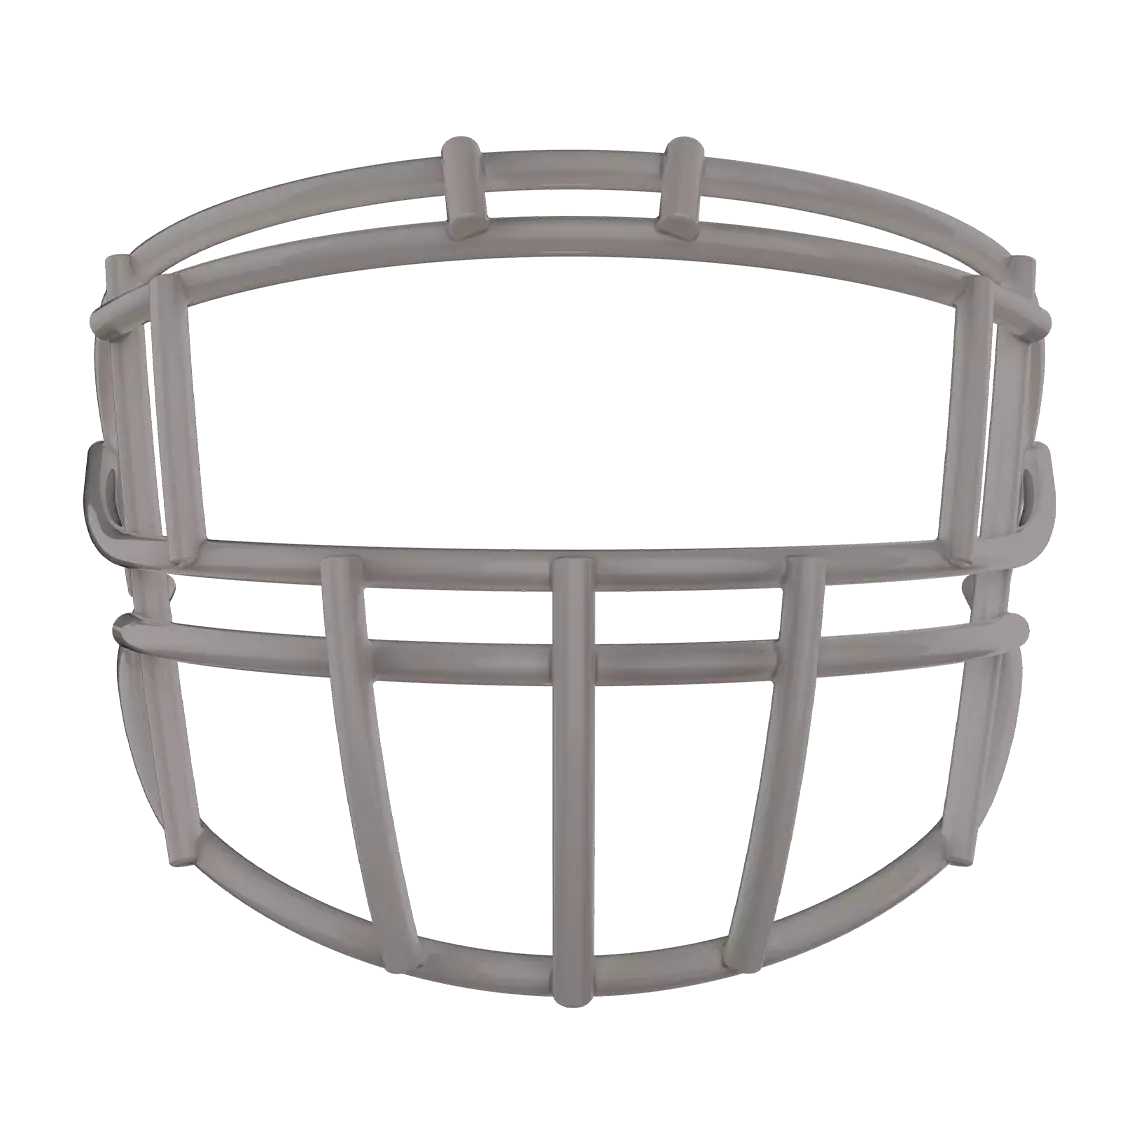 Gold XRS-22SX face mask for football helmet.